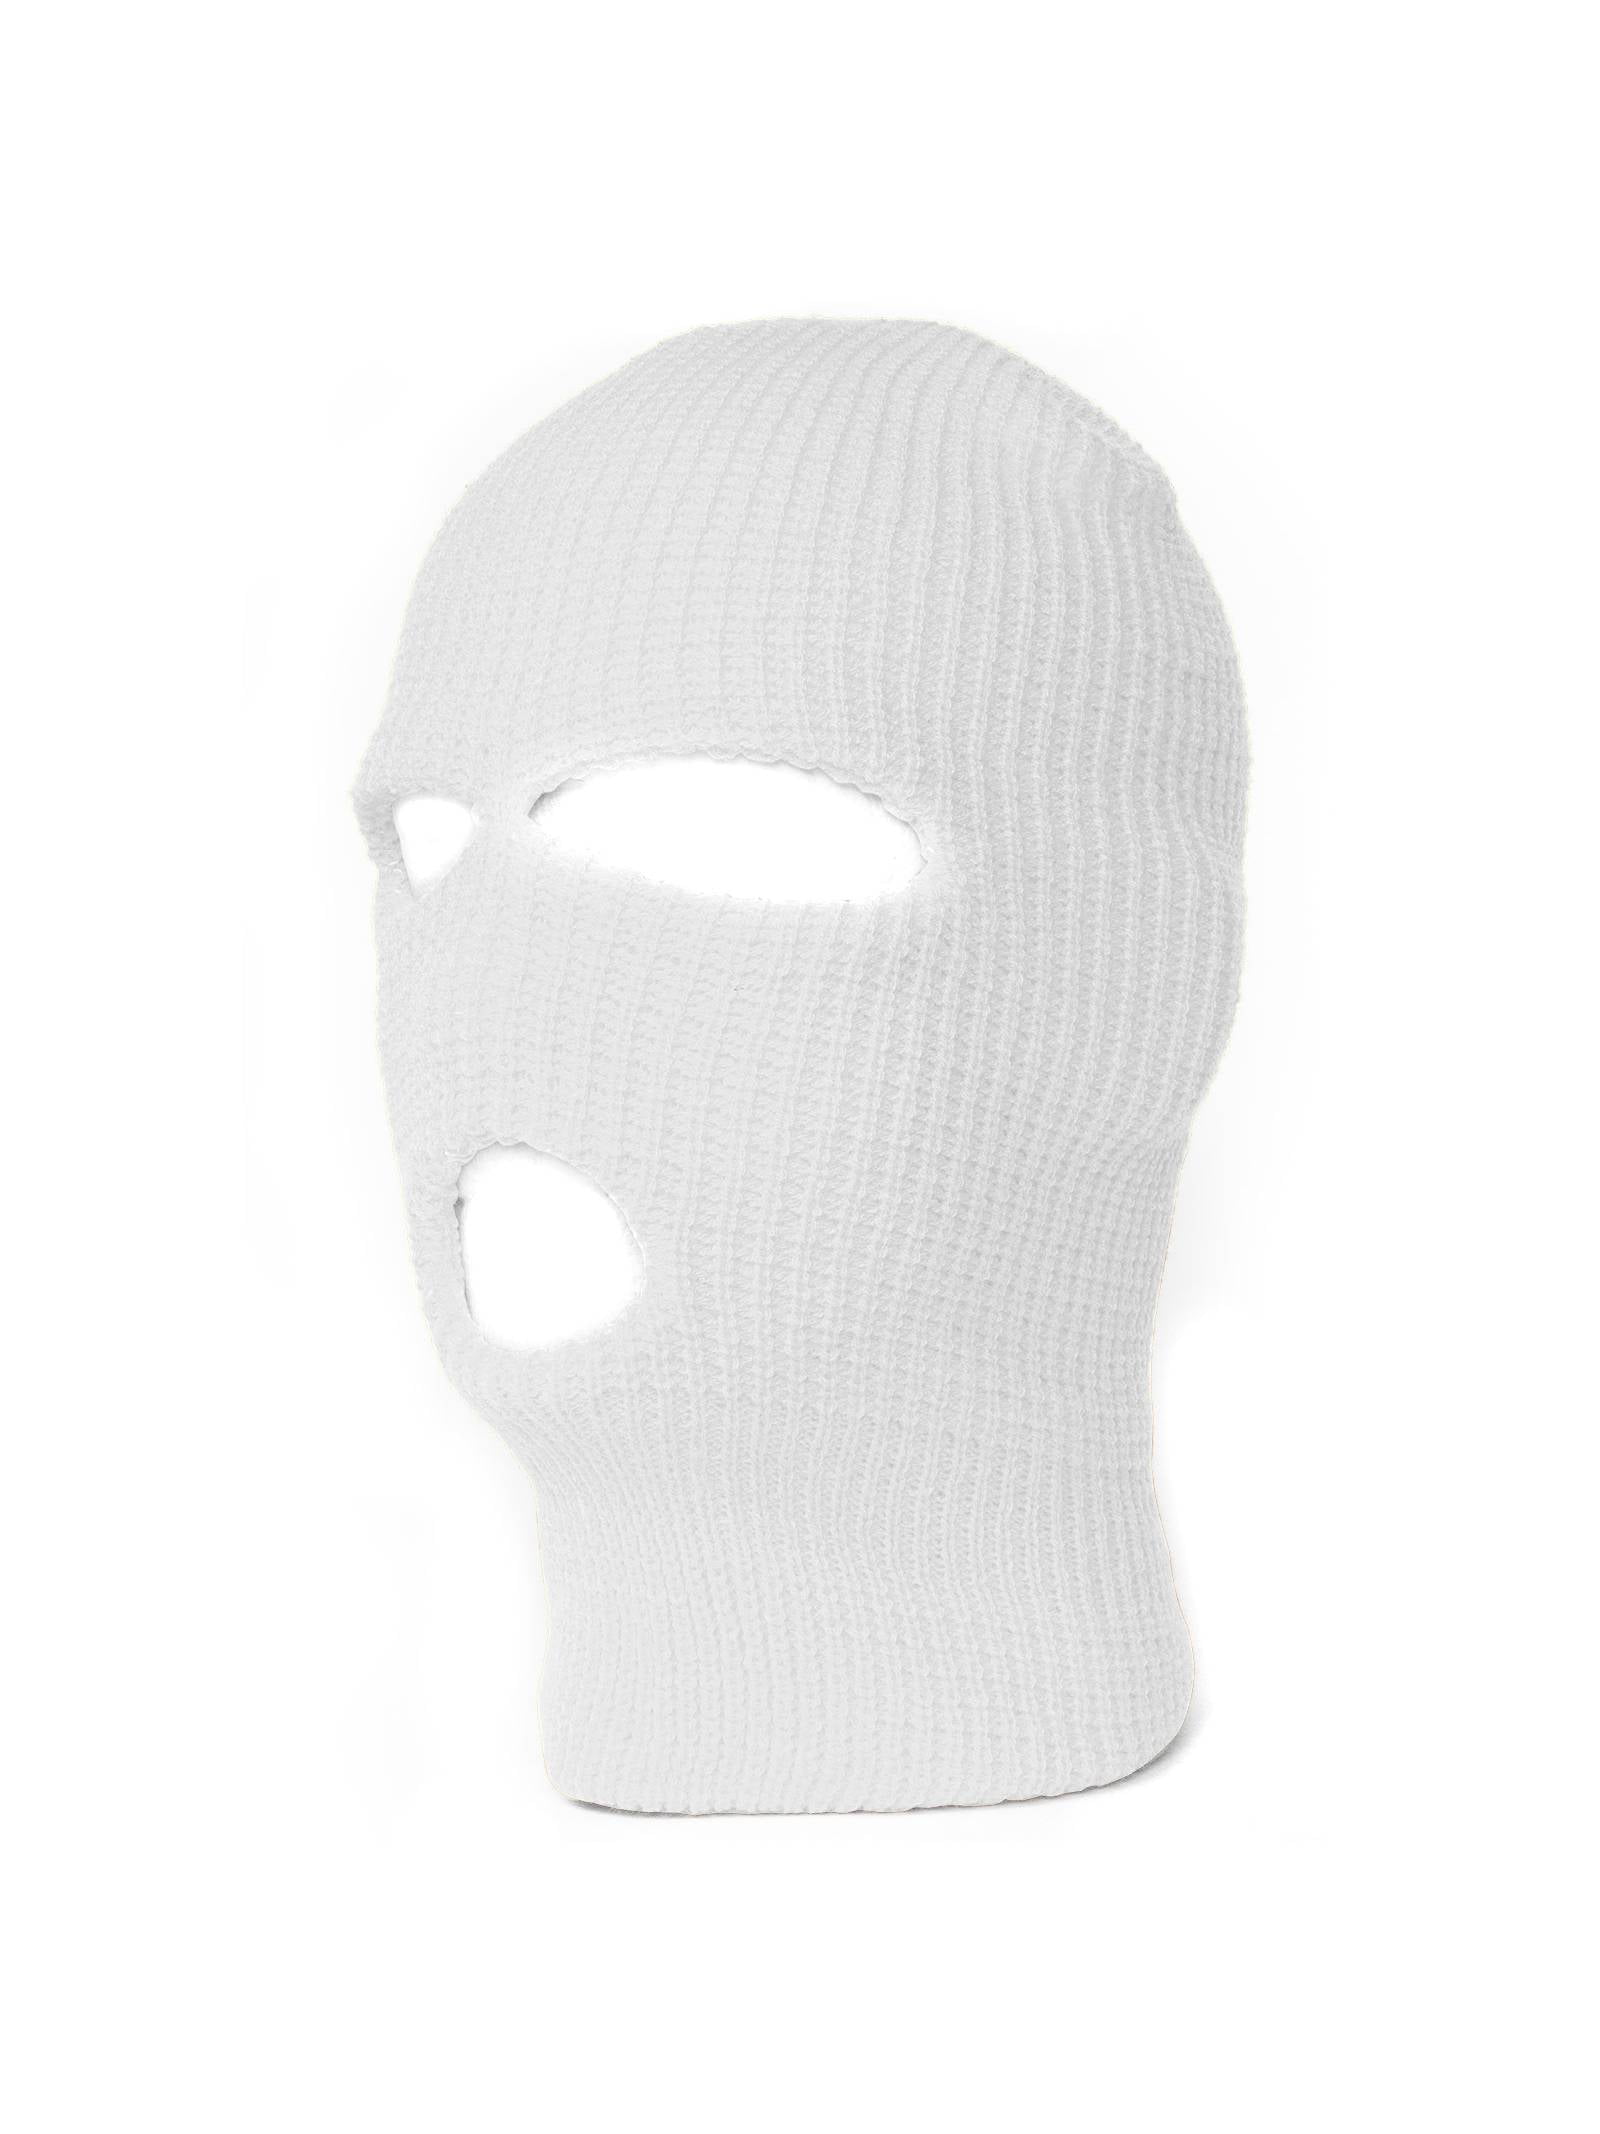 tolerance Derfra aluminium TopHeadwear's 3 Hole Face Ski Mask, White - Walmart.com